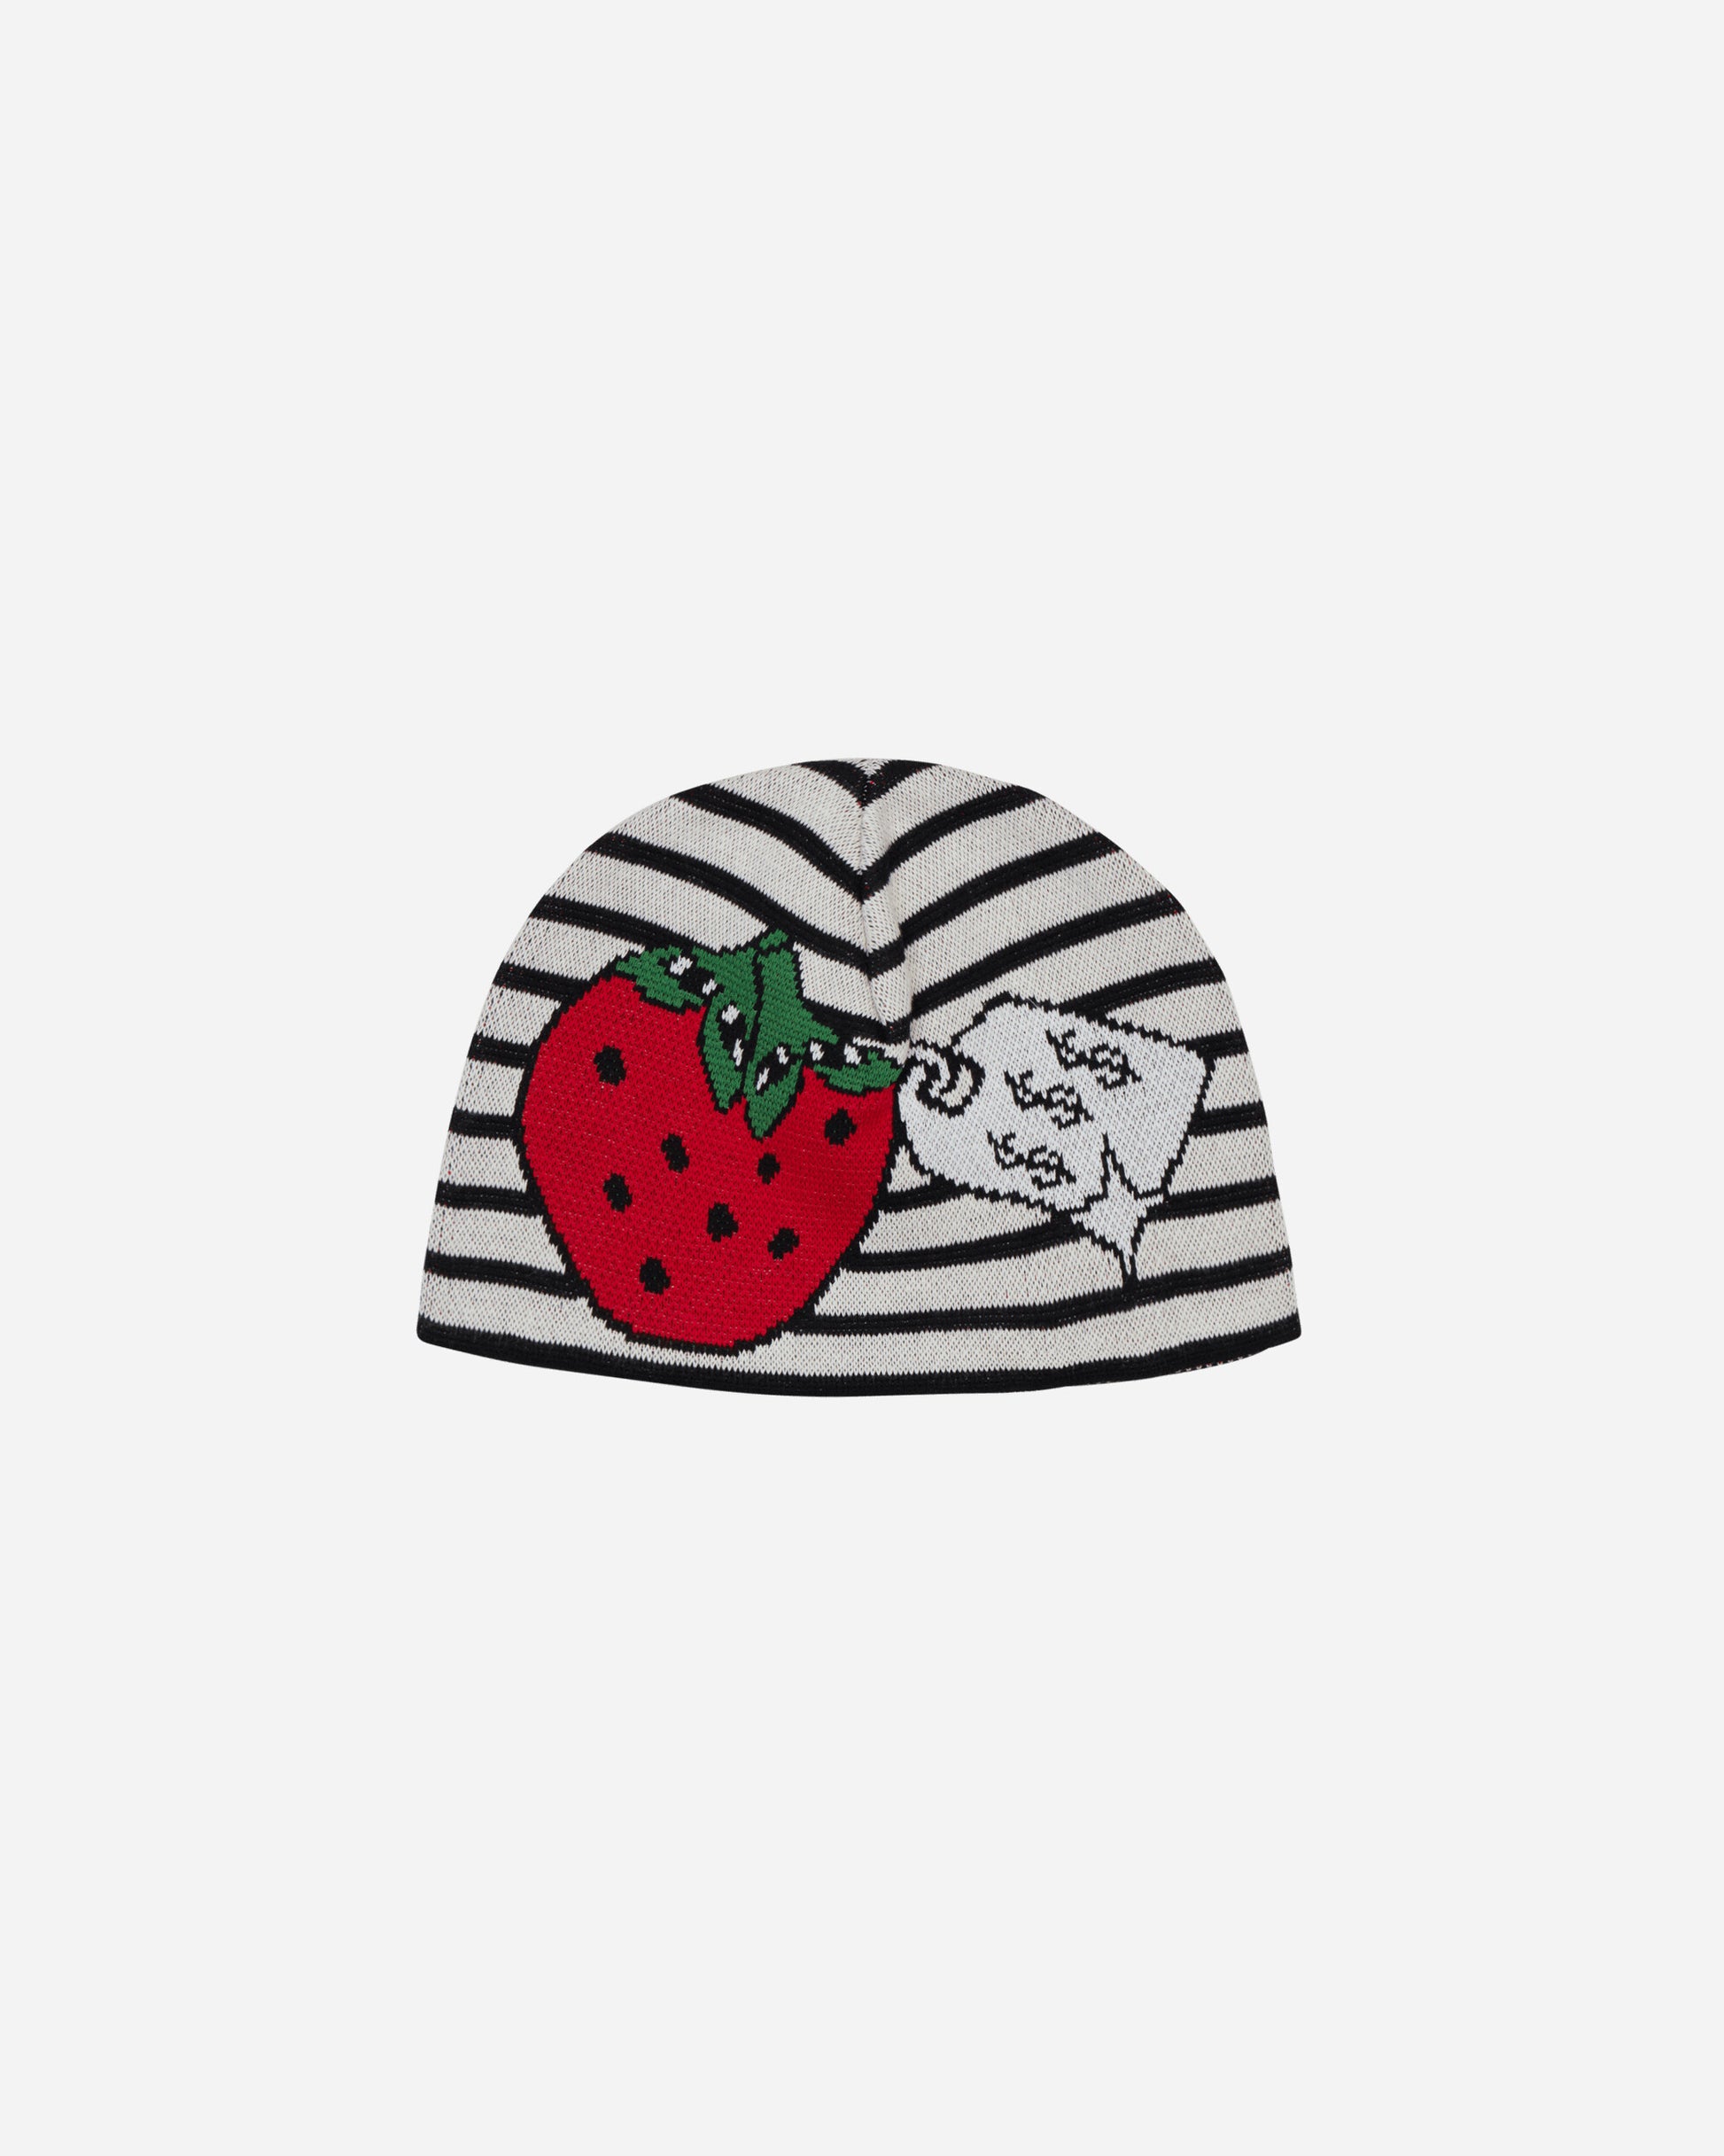 Stingwater V Speshal Organic Strawberry Beanie White/Stripes Hats Beanies VSPESHBEANIE STR